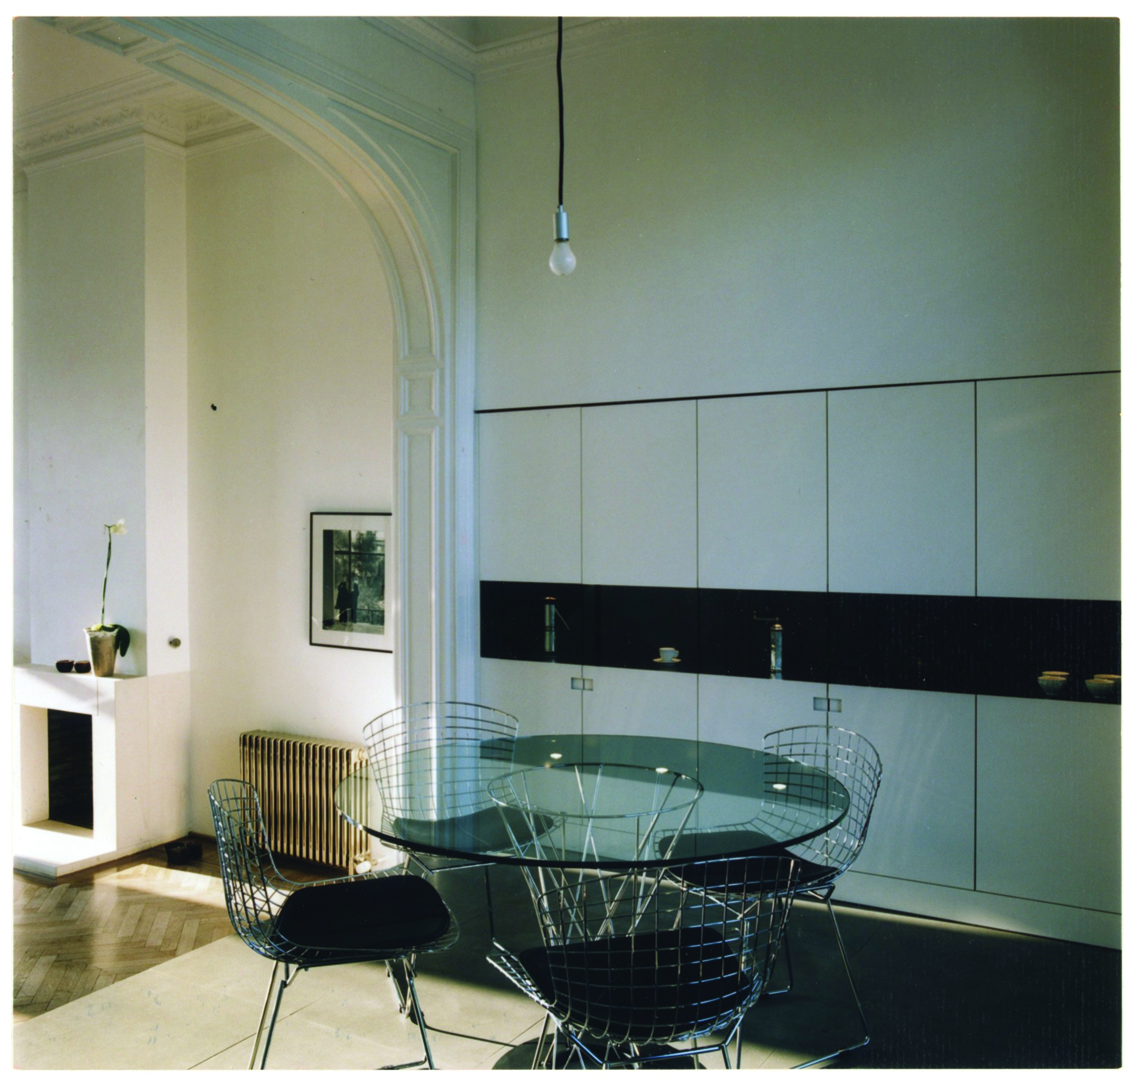 Strato_design_Igloo_bespoke kitchen design in Antwerpen_stratocolor white_mat stainless steel_glass_432